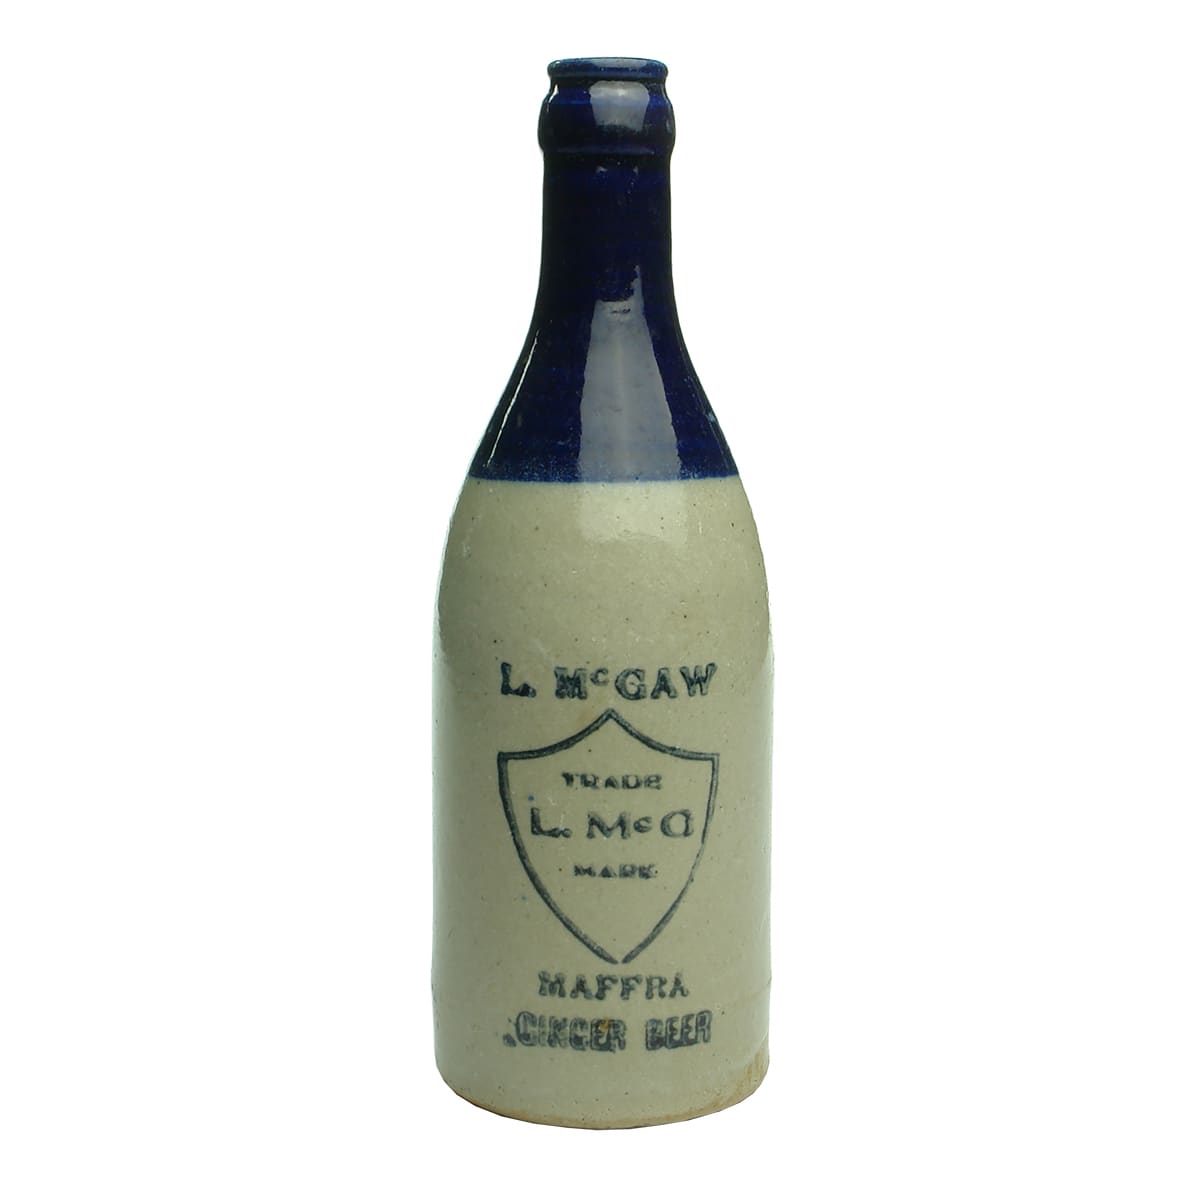 L. McGaw, Maffra crown seal ginger beer, blue top.